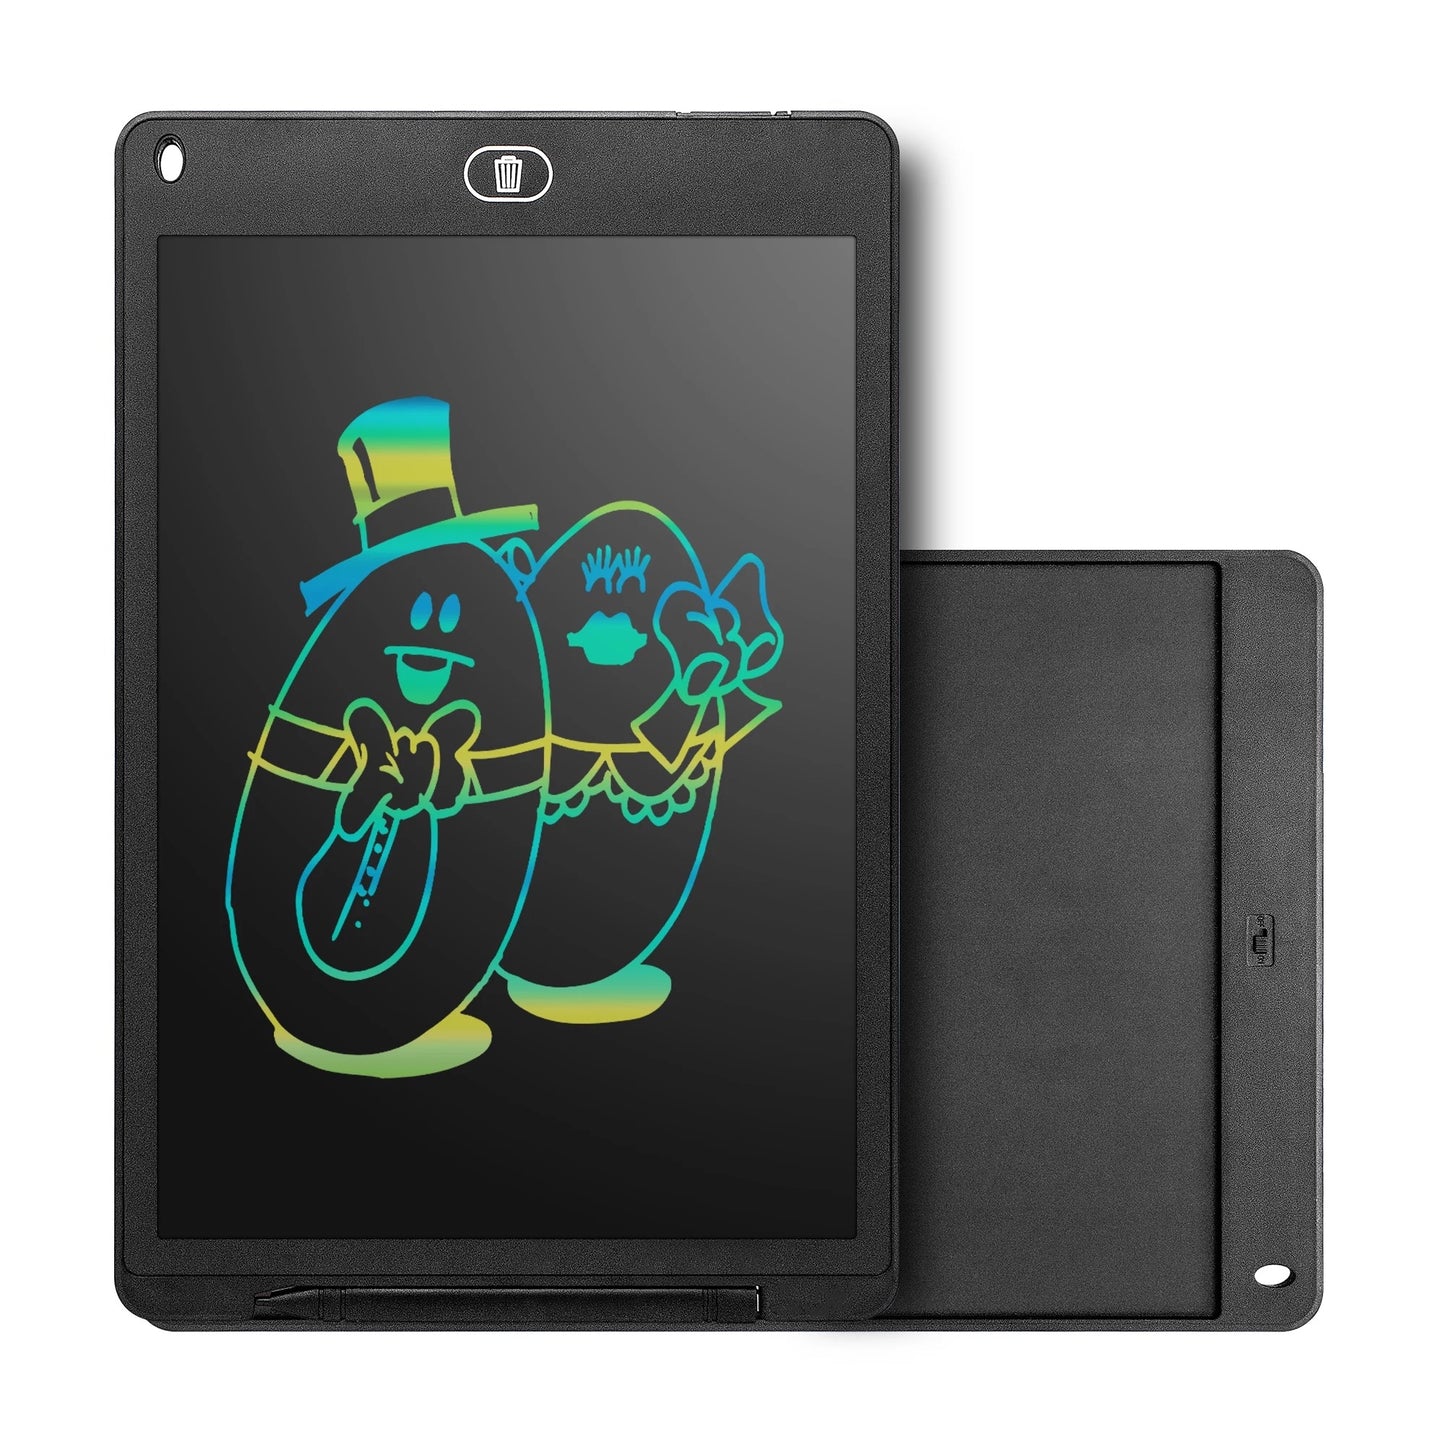 STĒDE LCD Digital Writing/doodle board pad, 12"/30cm